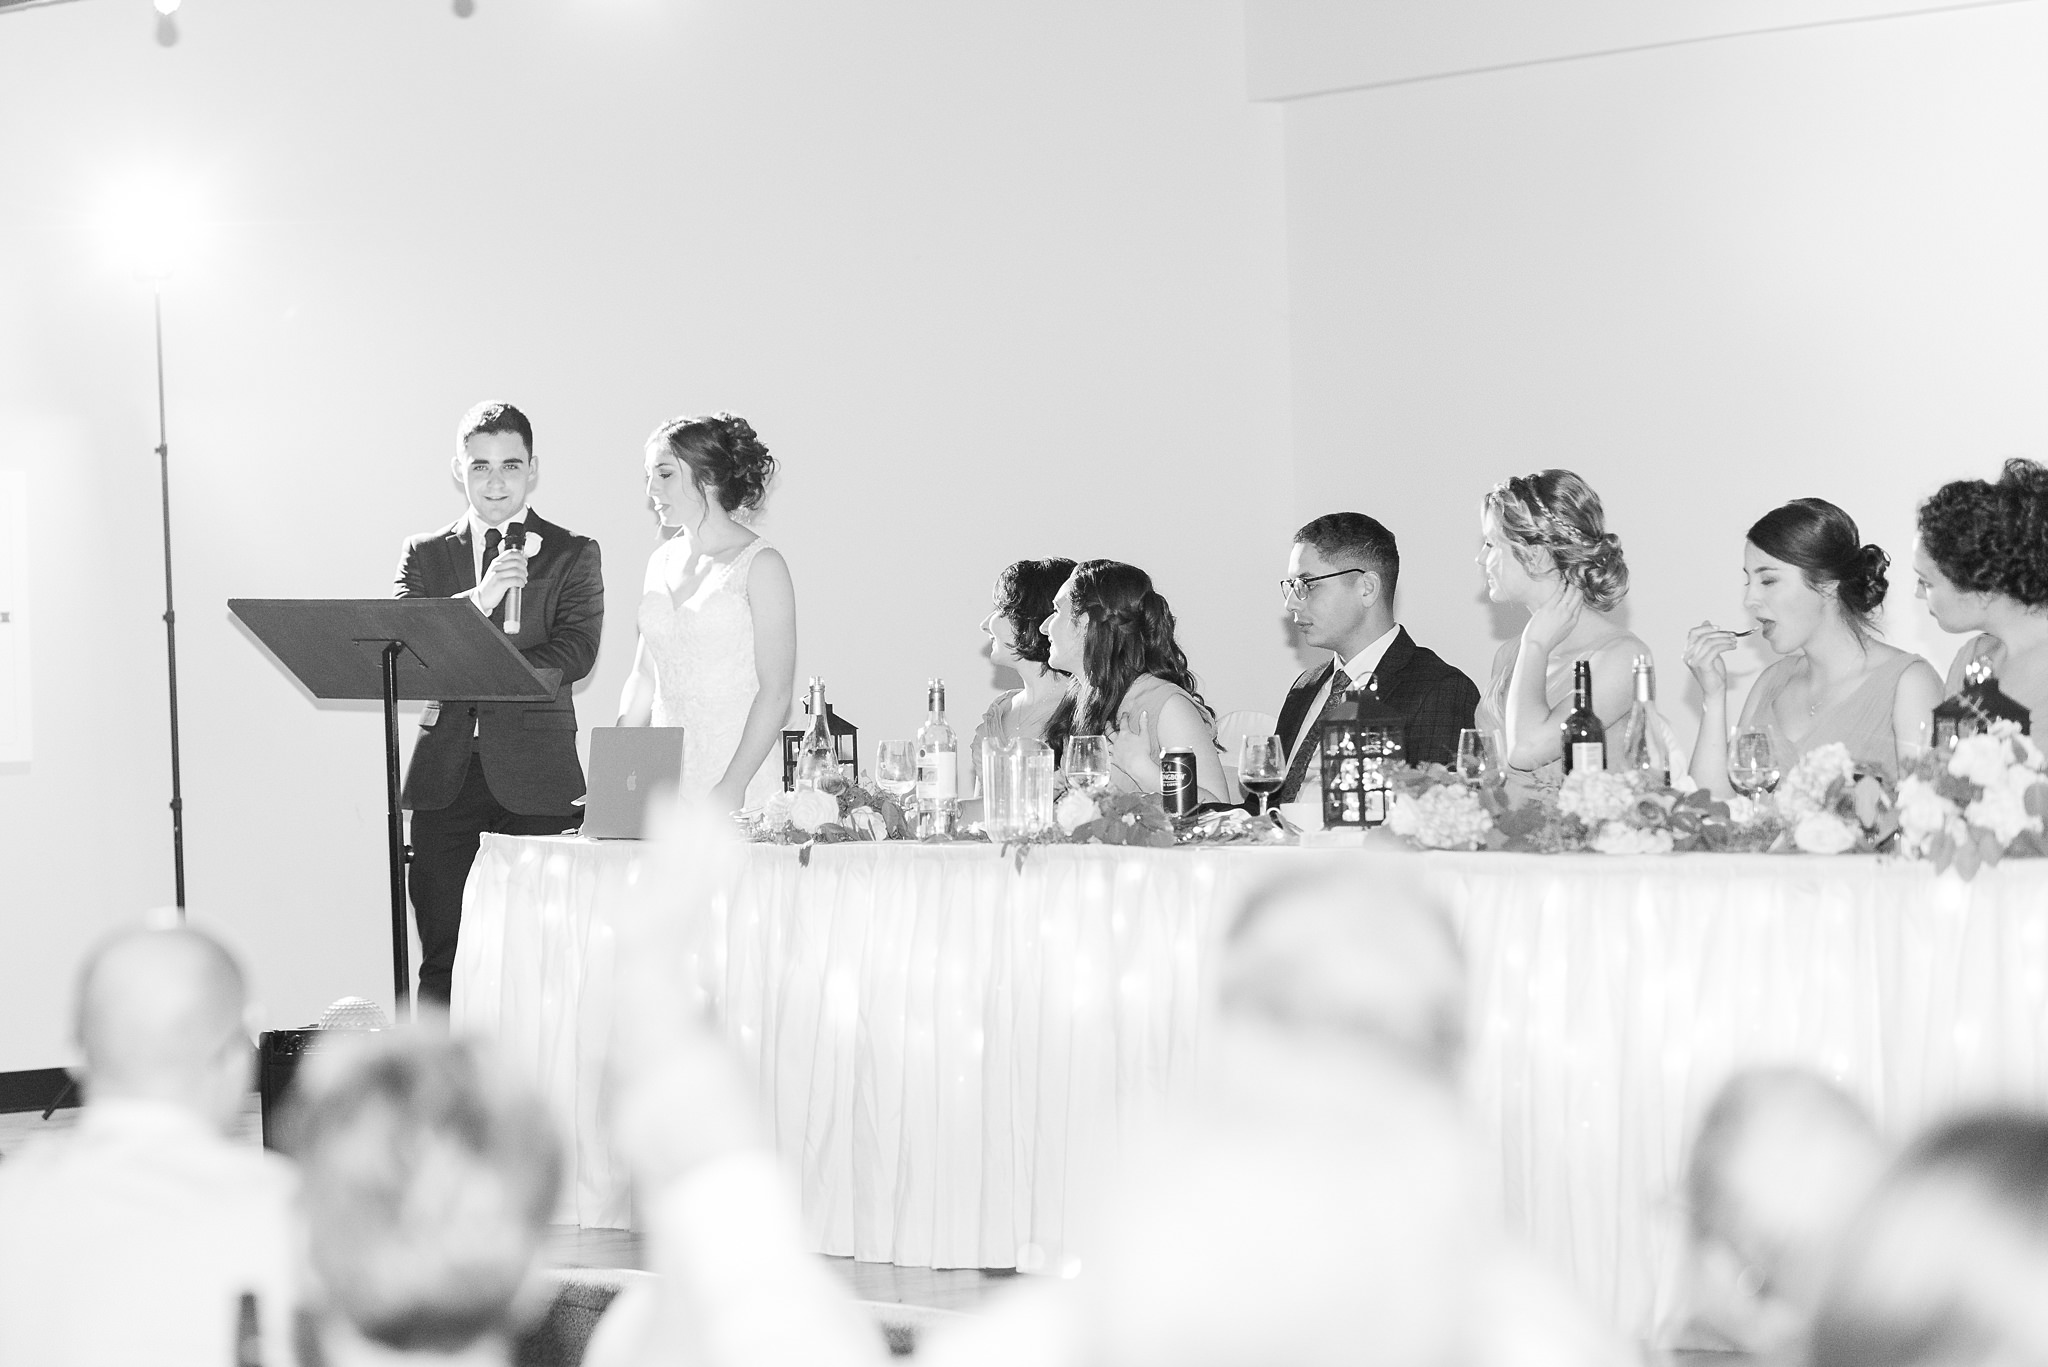 Alexandria Ontario Church Wedding | Ontario Weddings | Traditional Wedding at the St. Columba Presbyterian Church in North Glengary #alexandriaweddings #weddingphotography #ontarioweddings